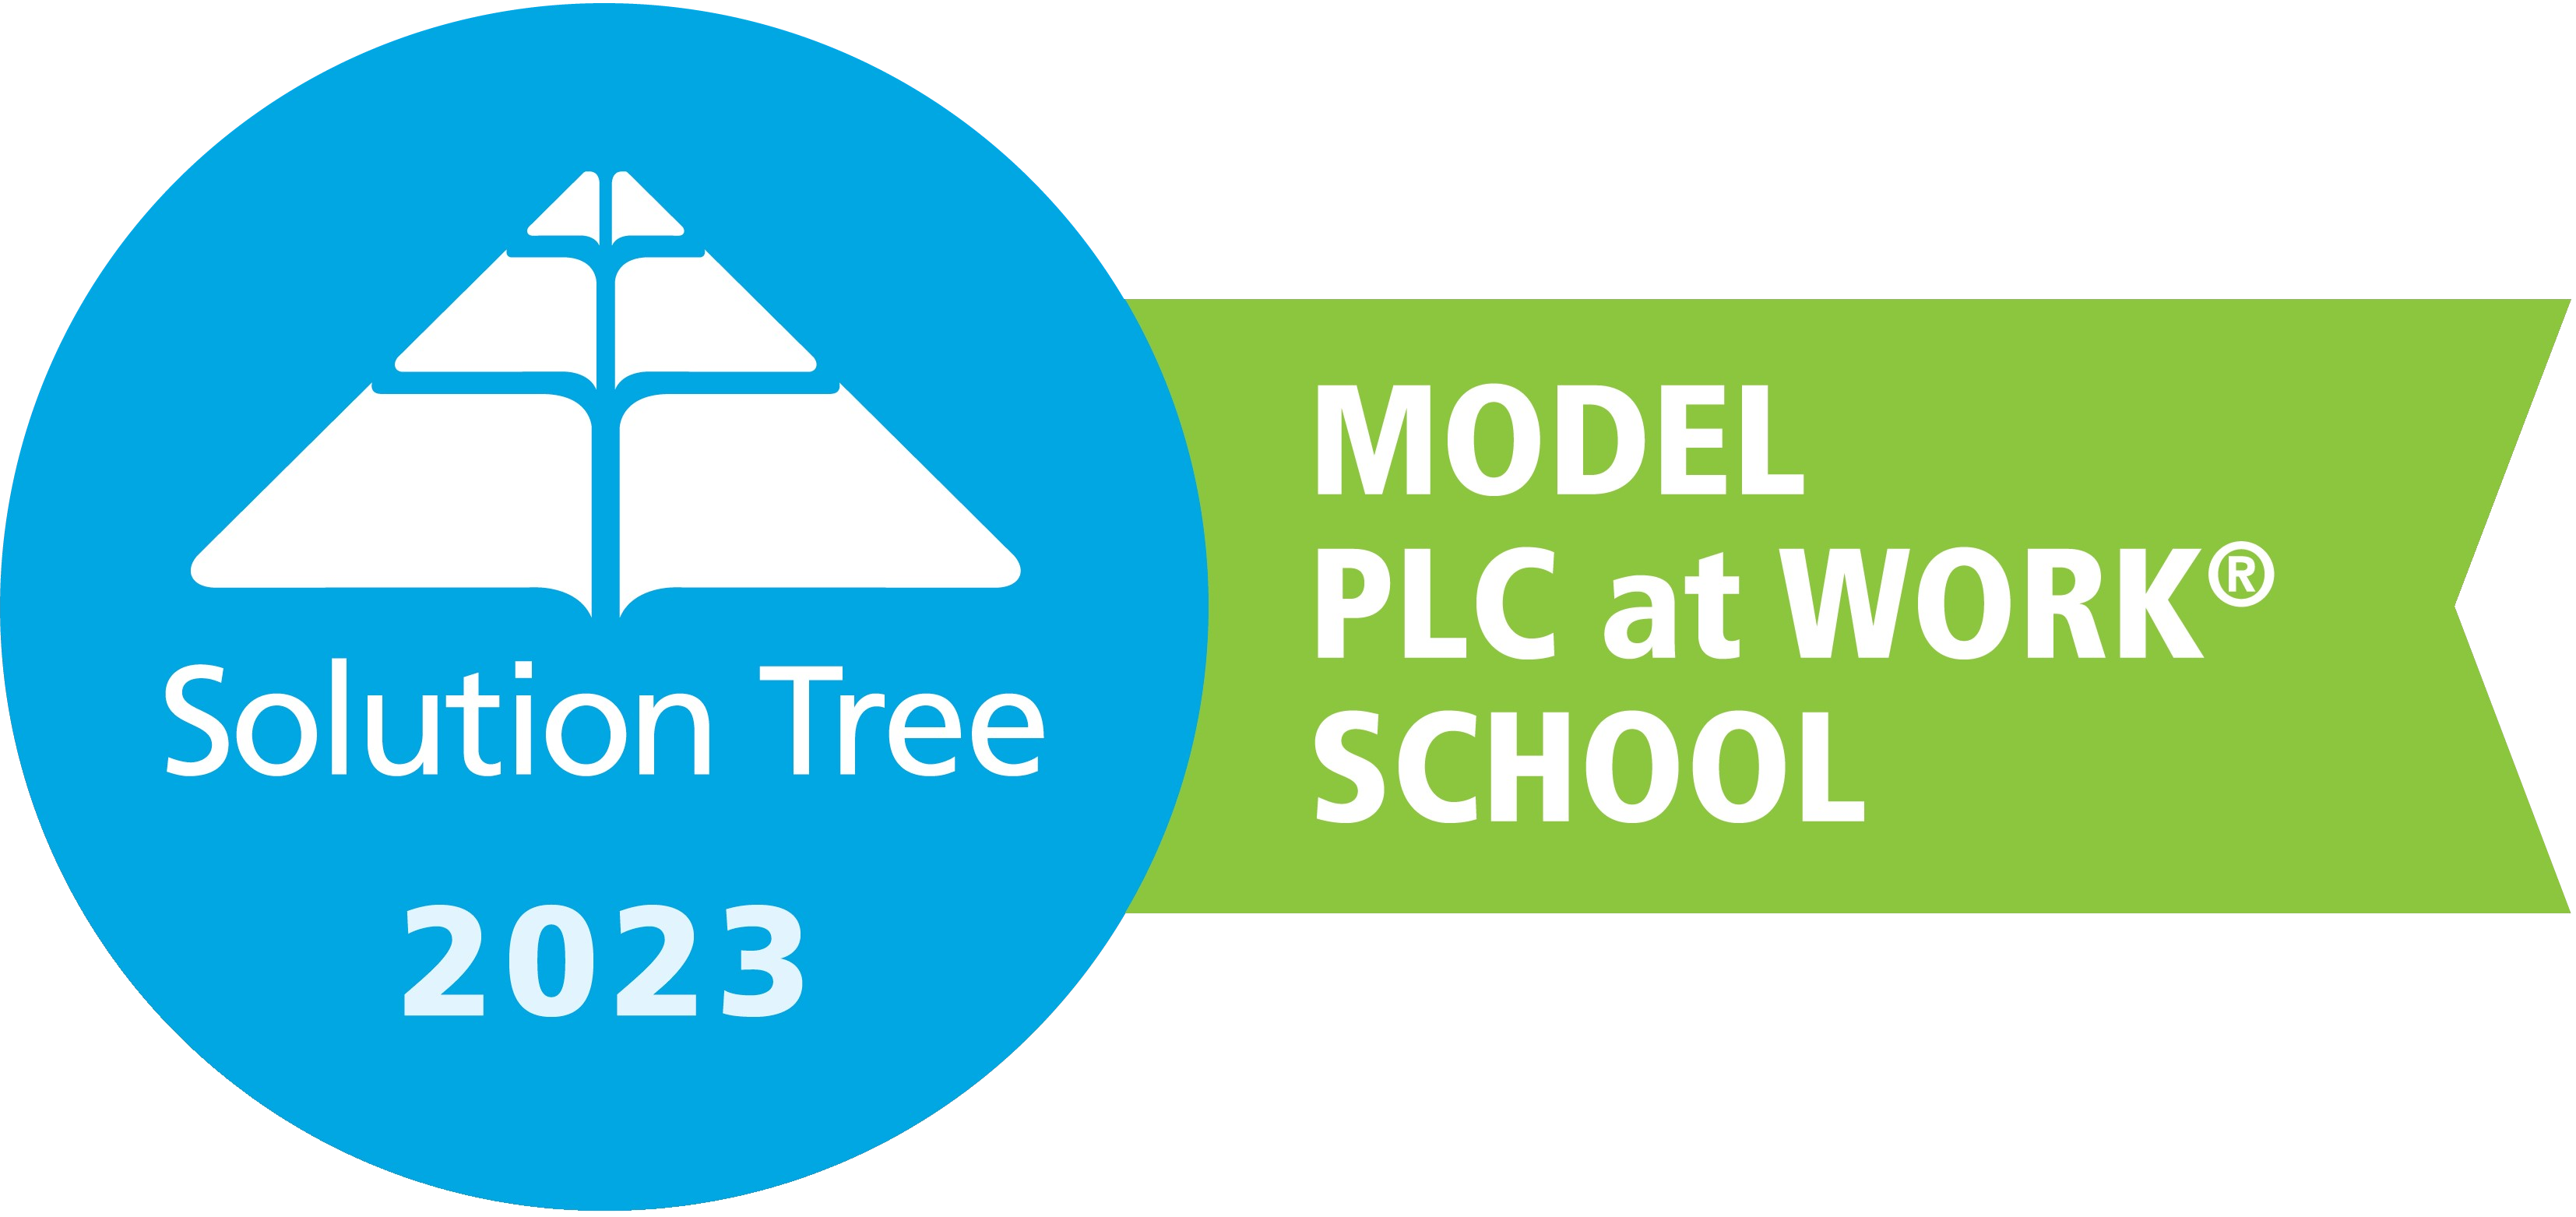 Solution Tree Model PLC at Work School Logo